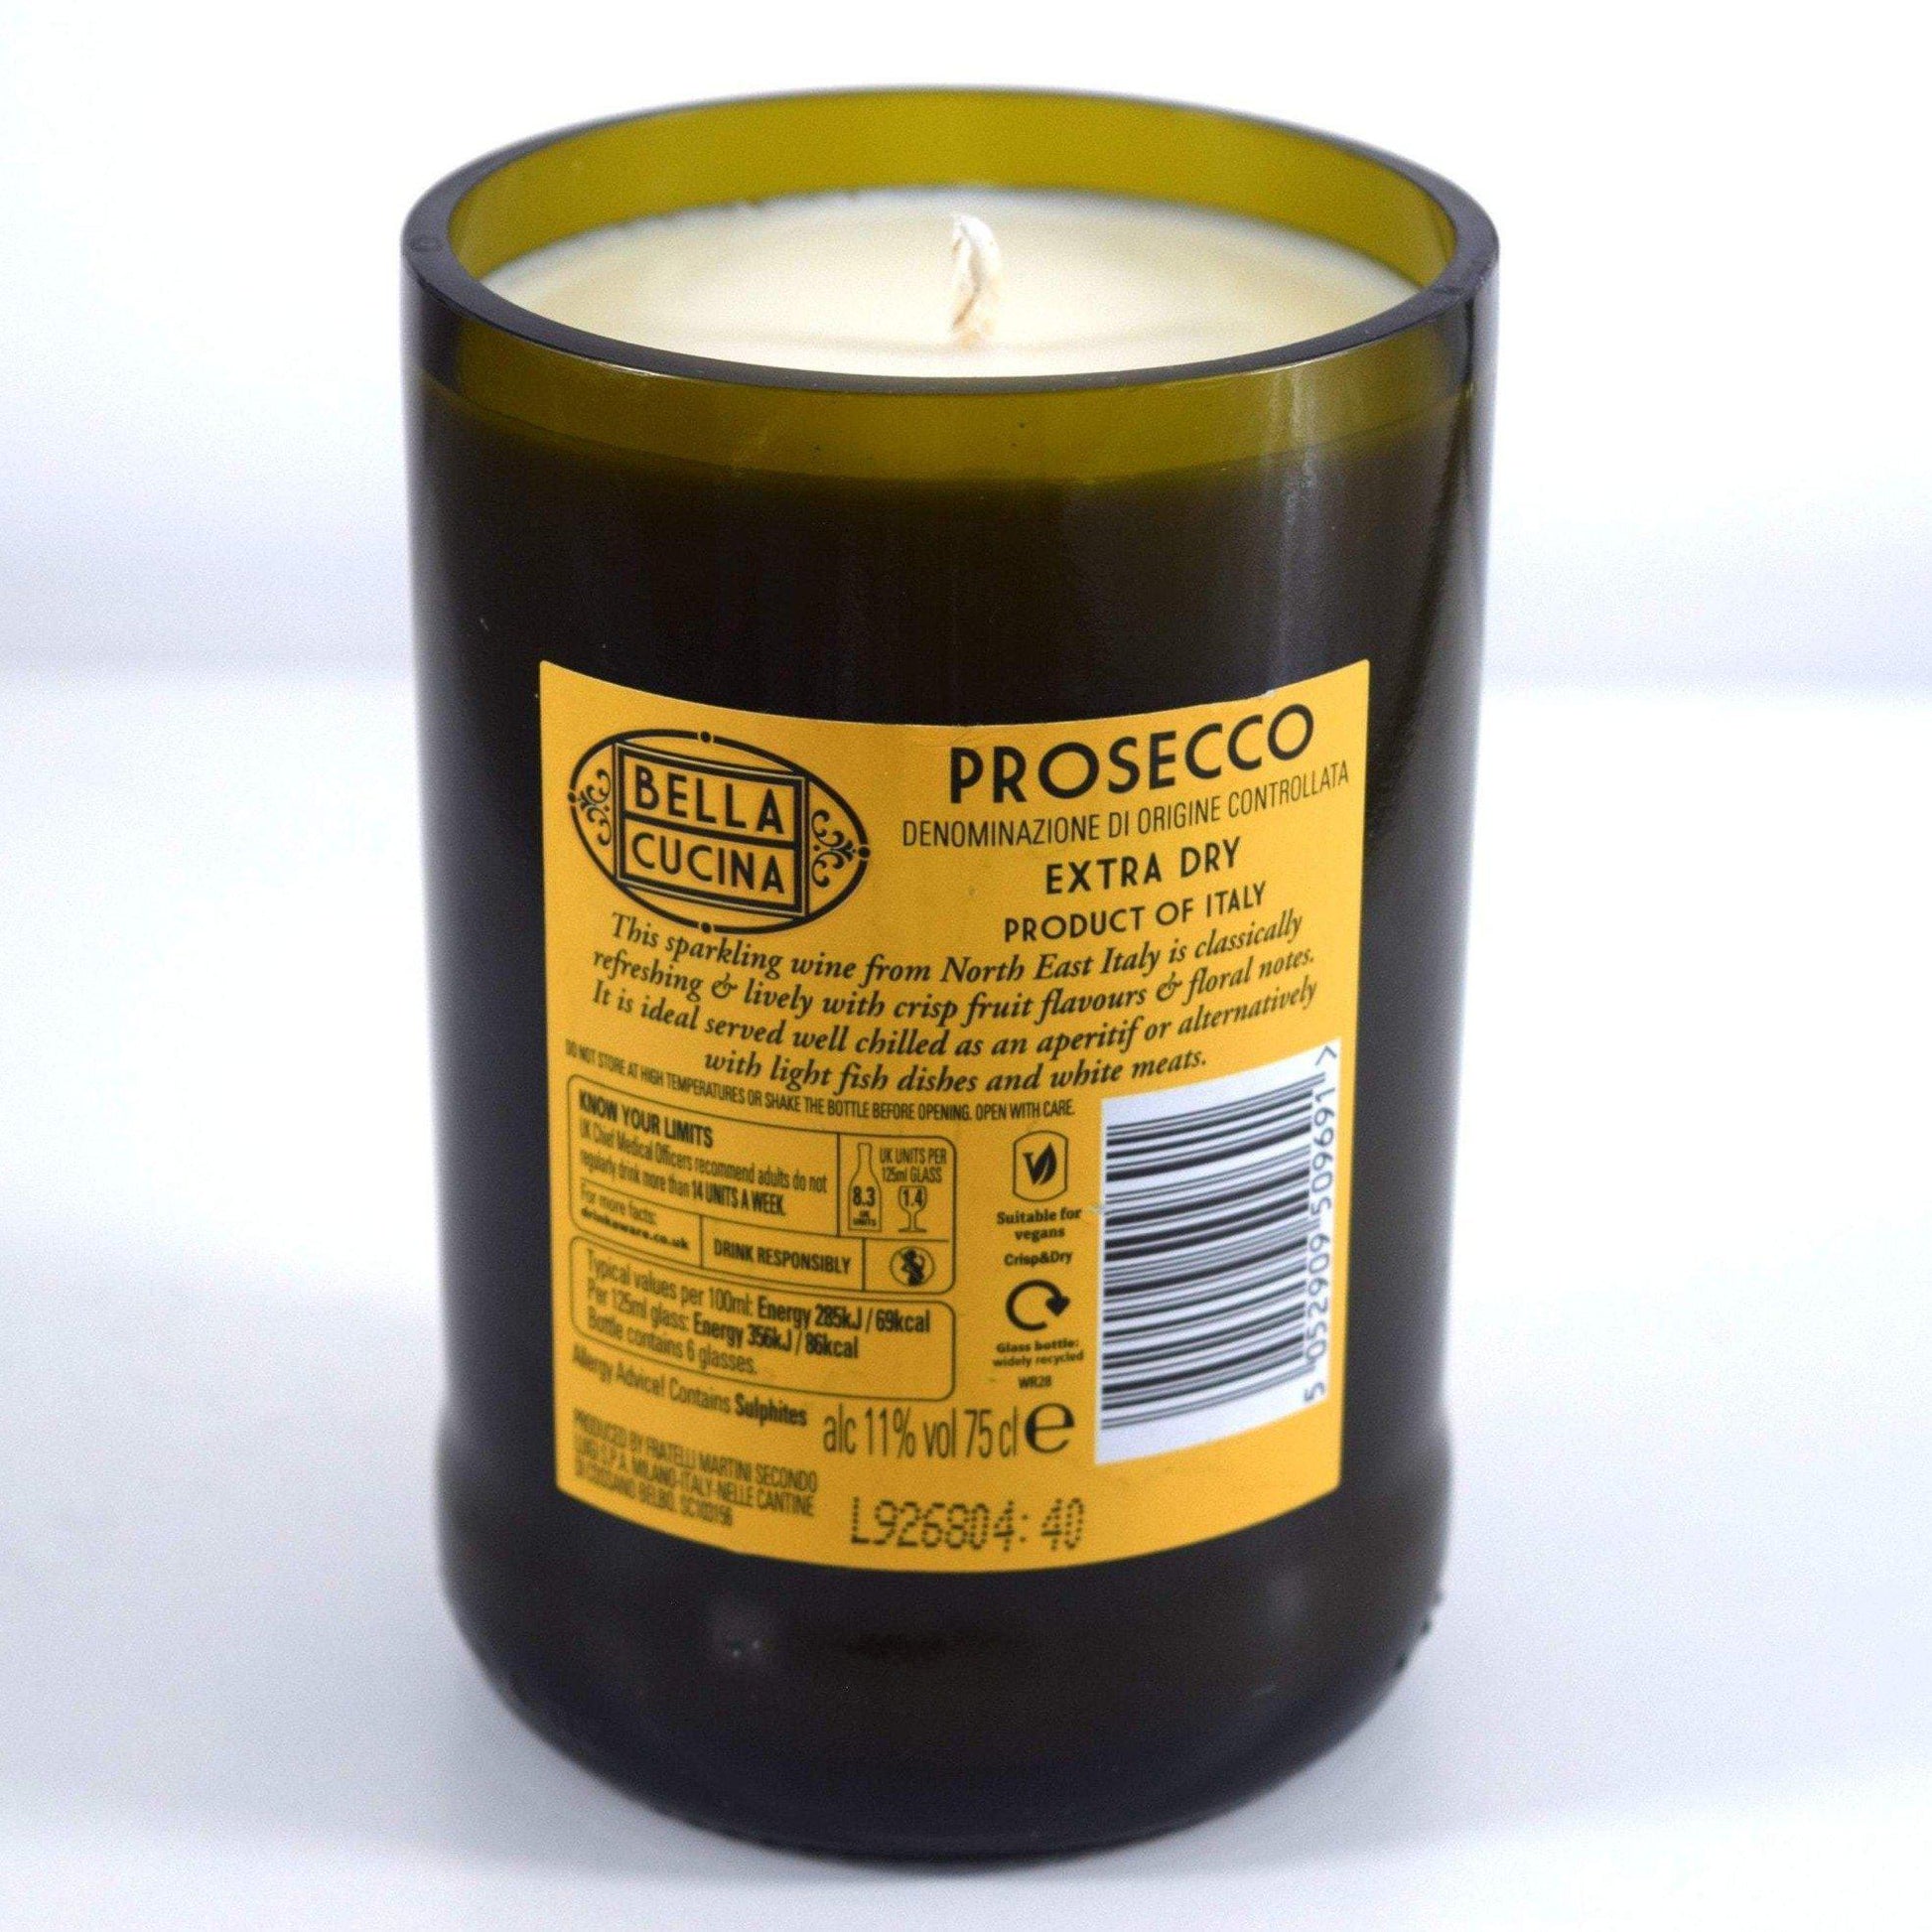 Bella Cucina Prosecco Bottle Candle Wine & Prosecco Bottle Candles Adhock Homeware